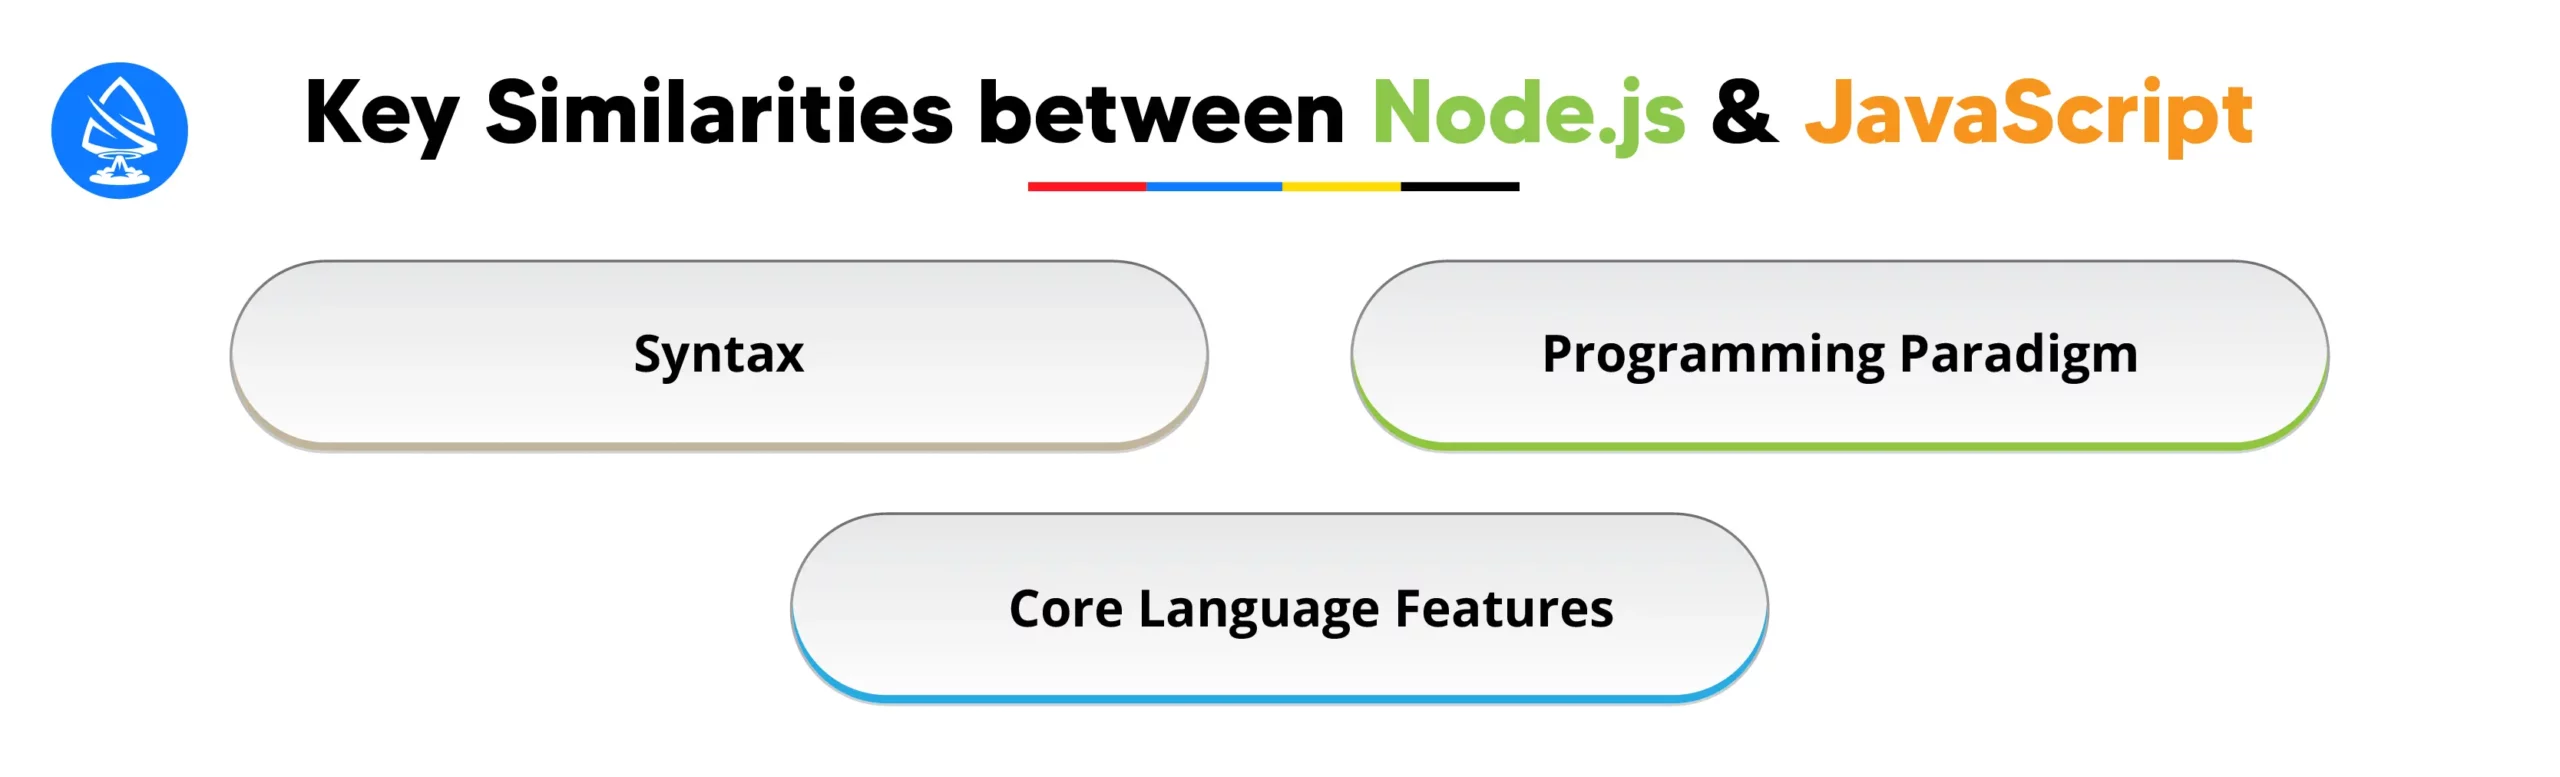 Key Similarities between Node.js and JavaScript